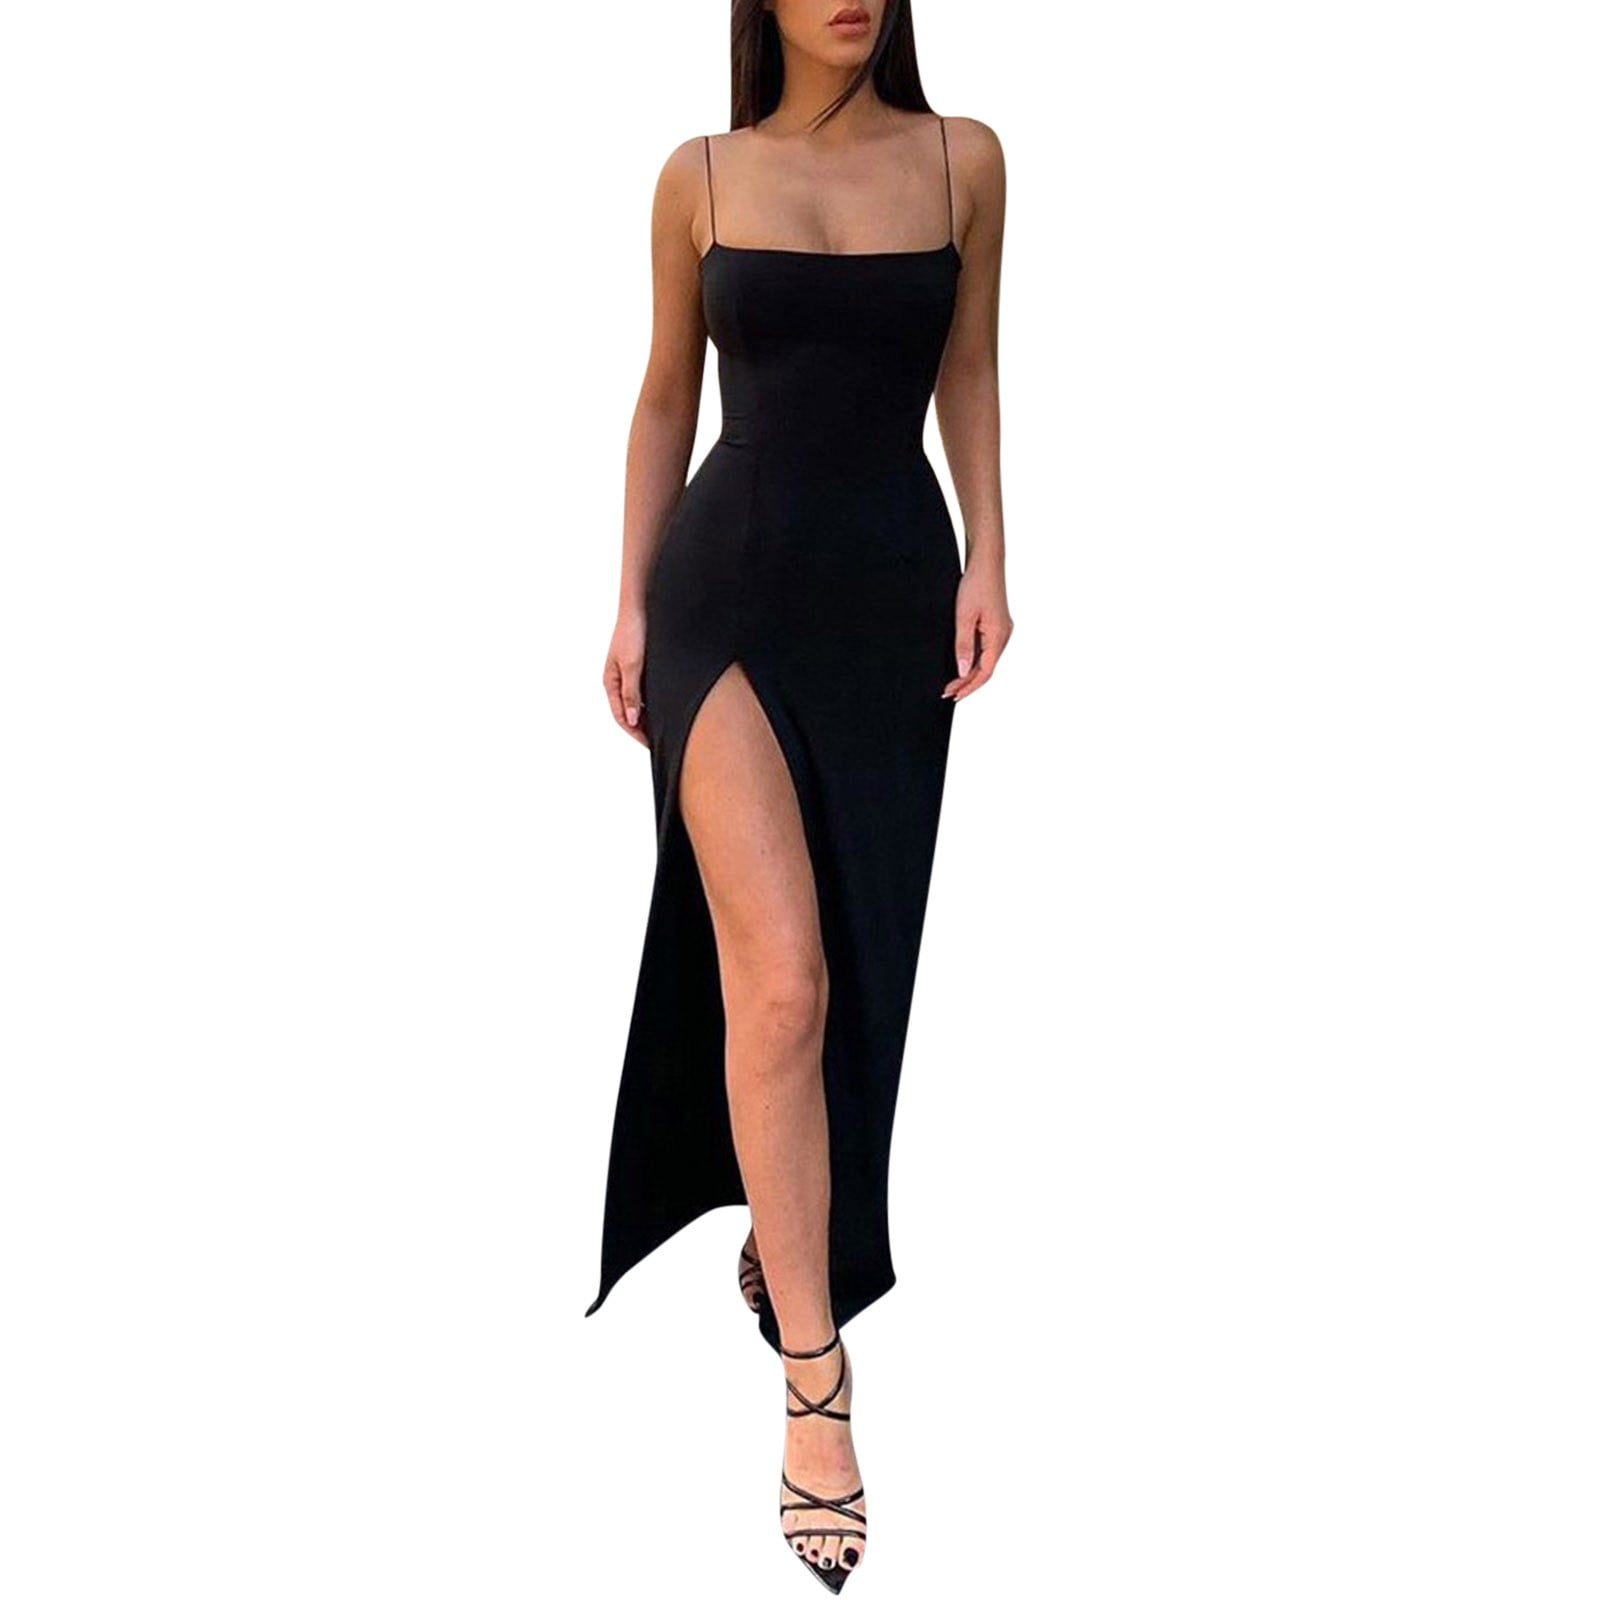 iOPQO Black Dresses Maxi Evening Dress Long Women For Dress Neck Lash Women Dress Slim S Solid Party Dress Sundress Split Dress Party Strap Elegant Club Dress For